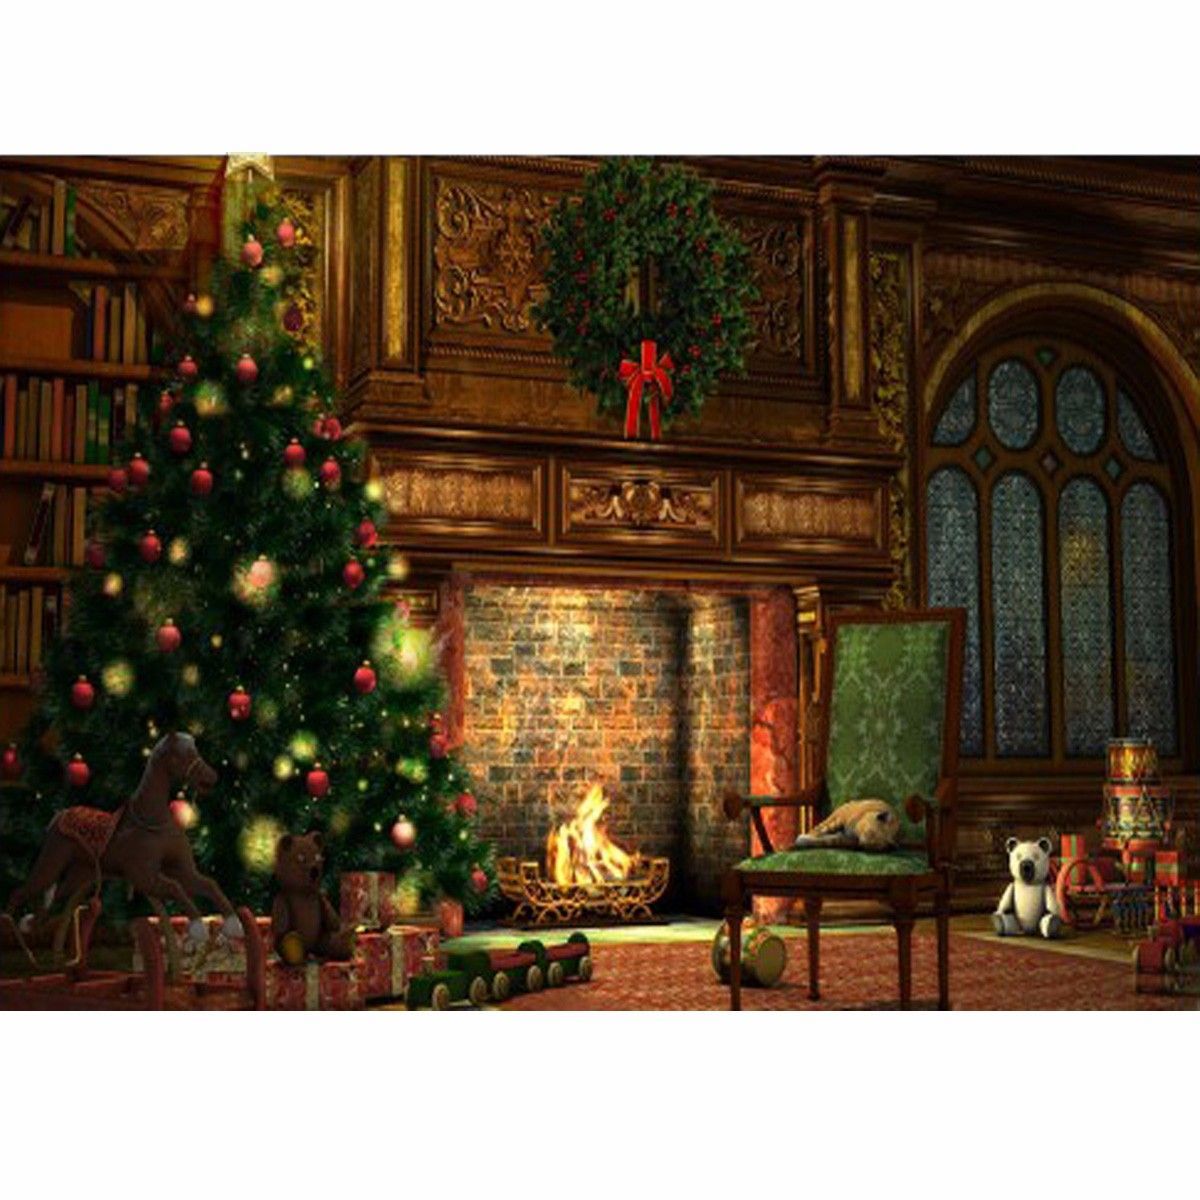 5x7FT-Christmas-Tree-Fireplace-Window-Photography-Backdrop-Background-Studio-Prop-1385897